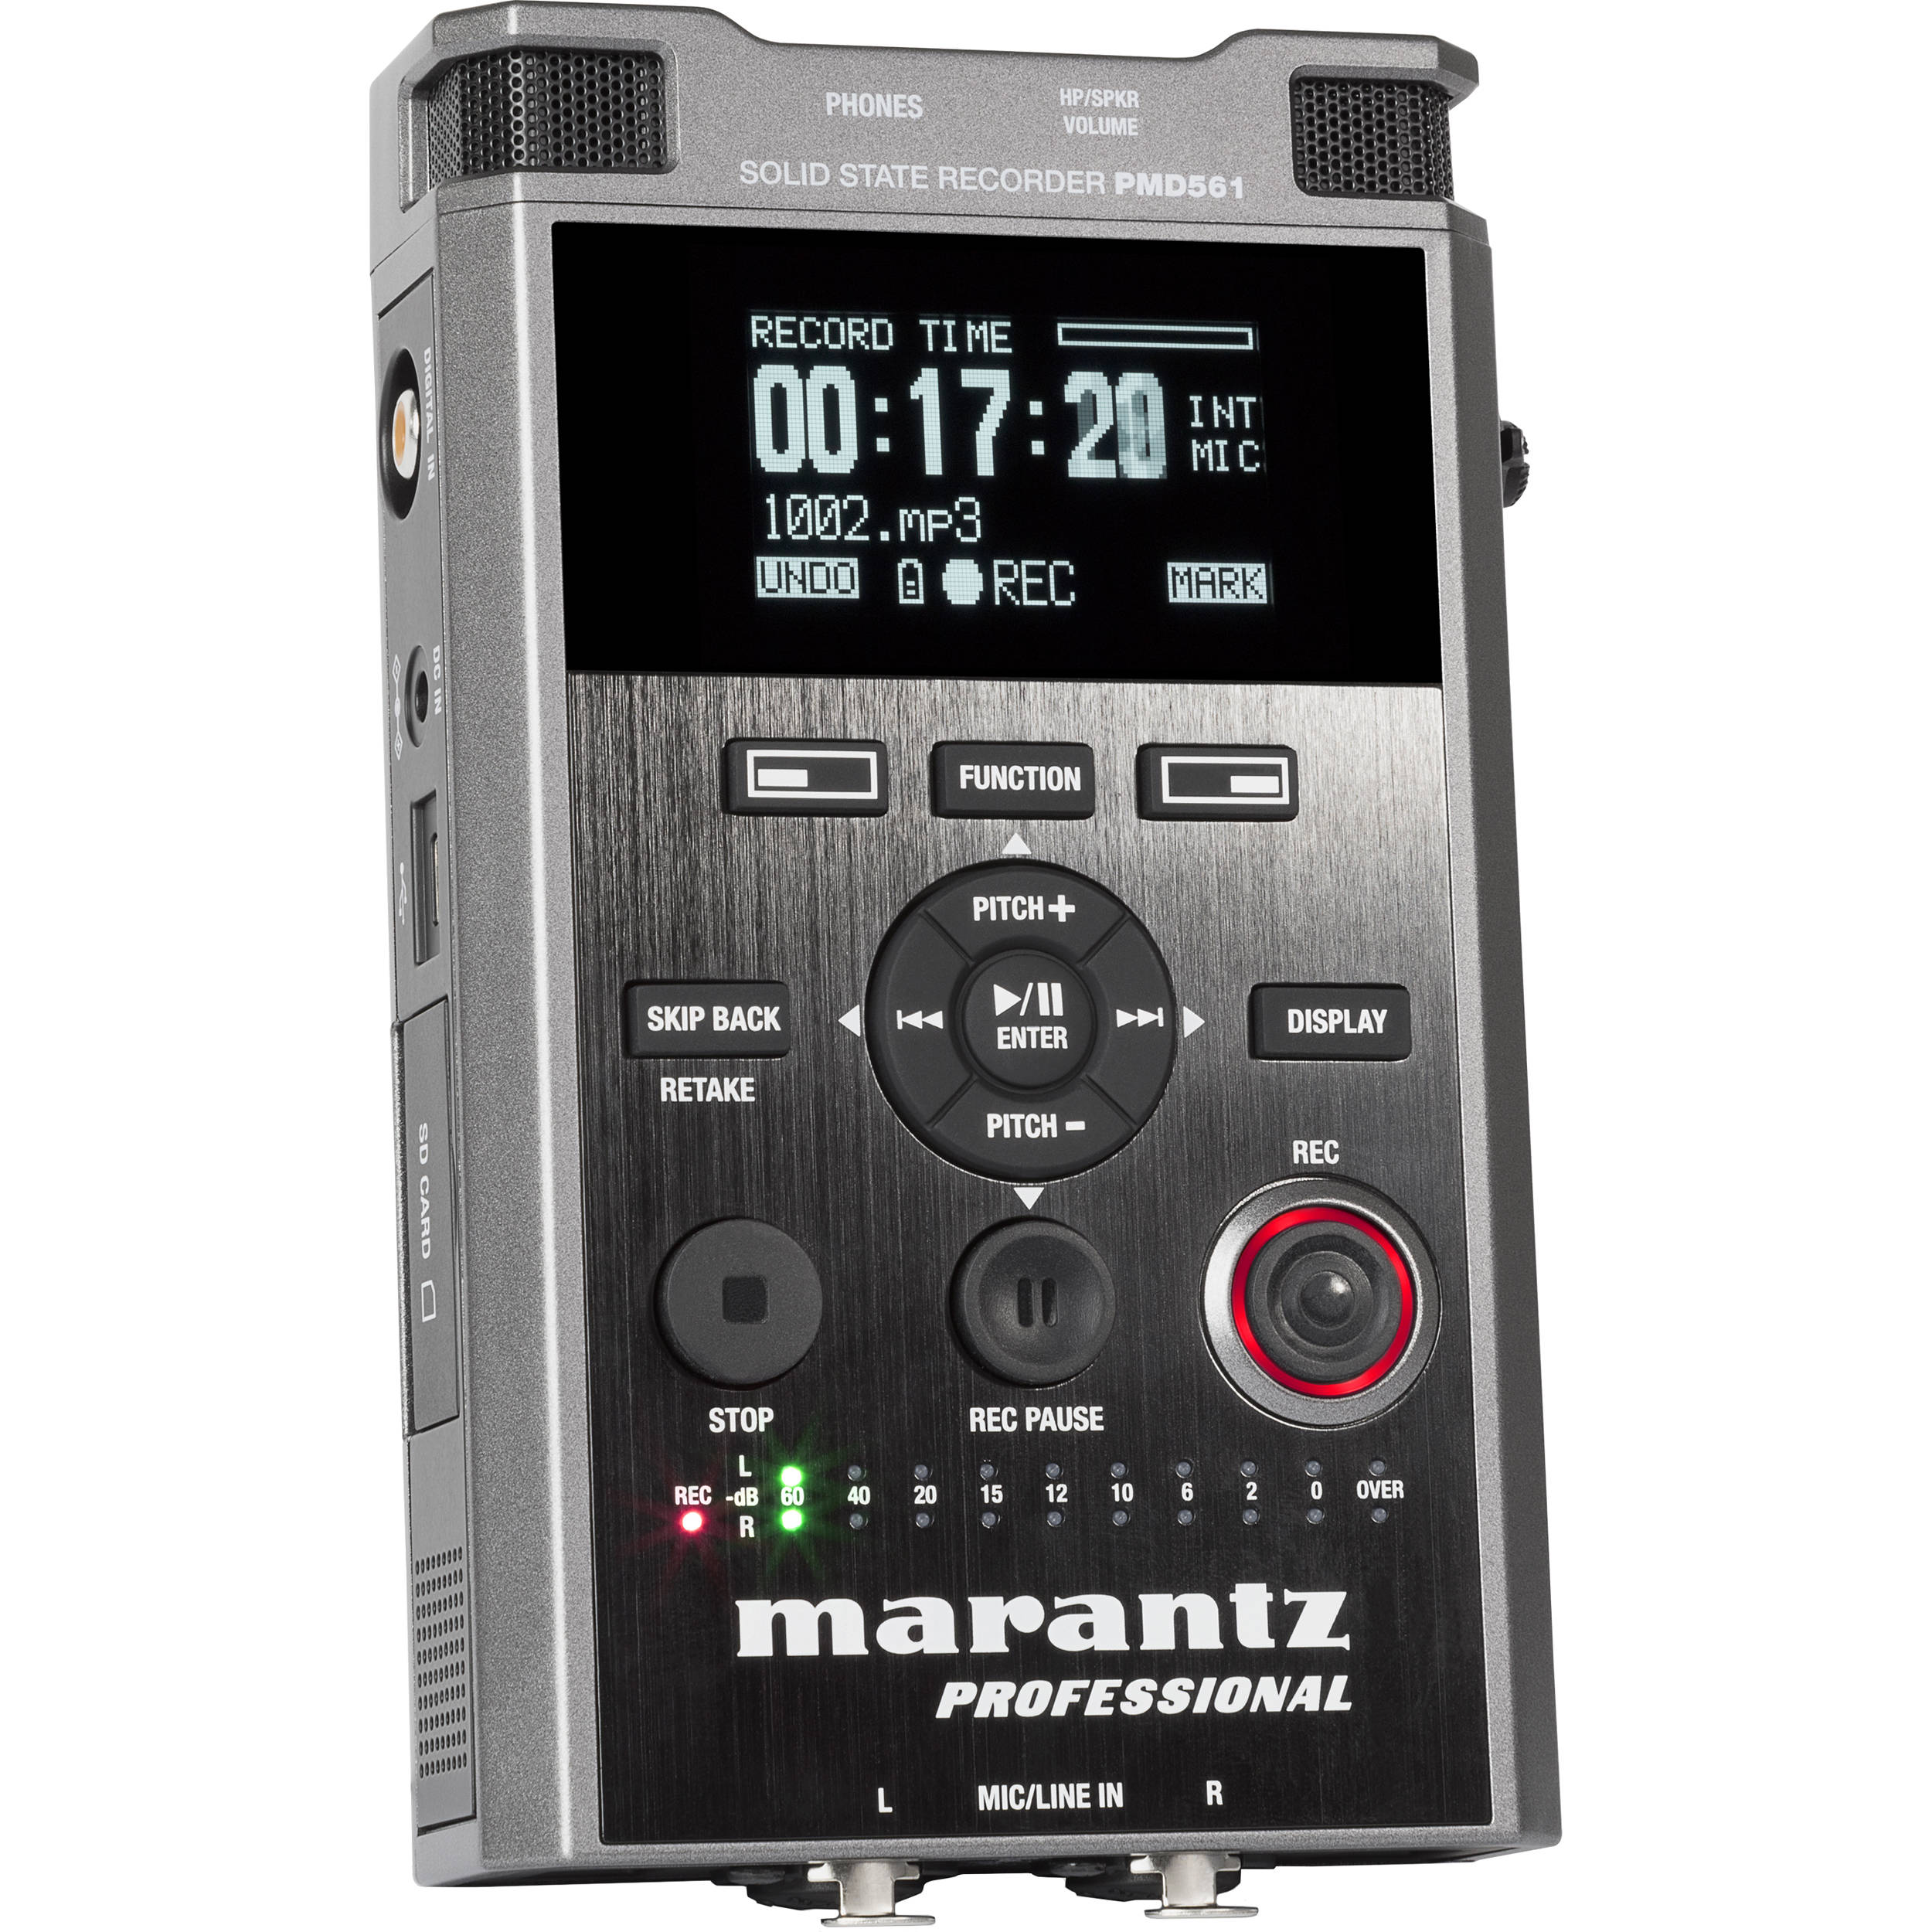 Marantz Professional Professional Portable Audio Recorder